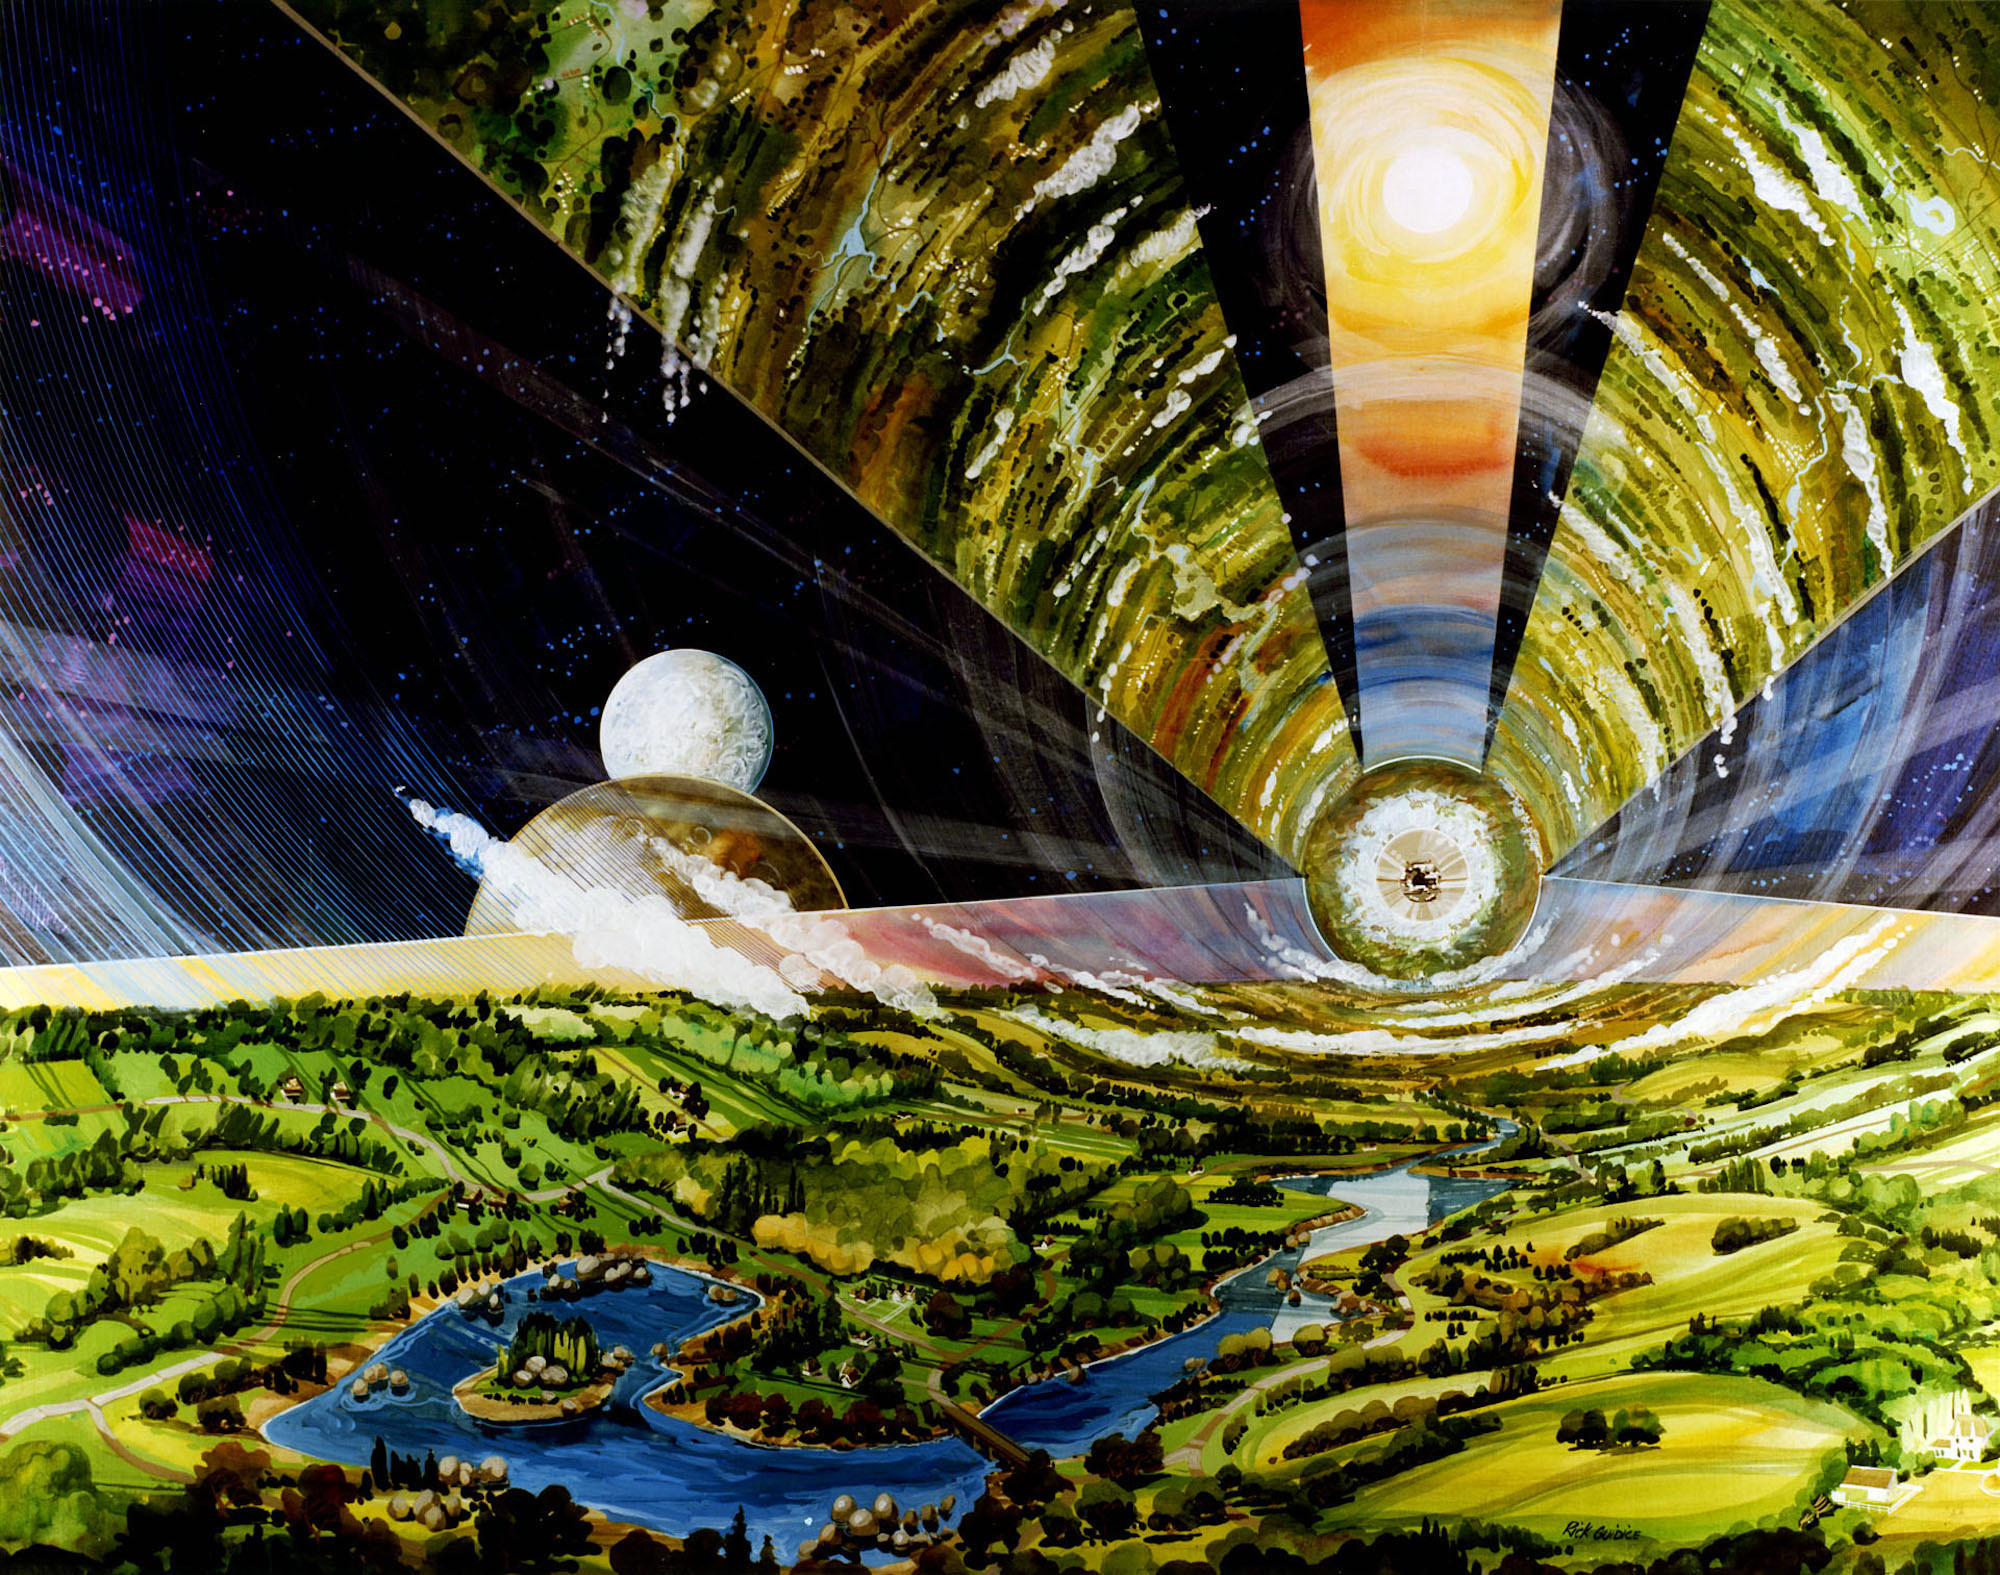 1950s us spacecraft concept artwork